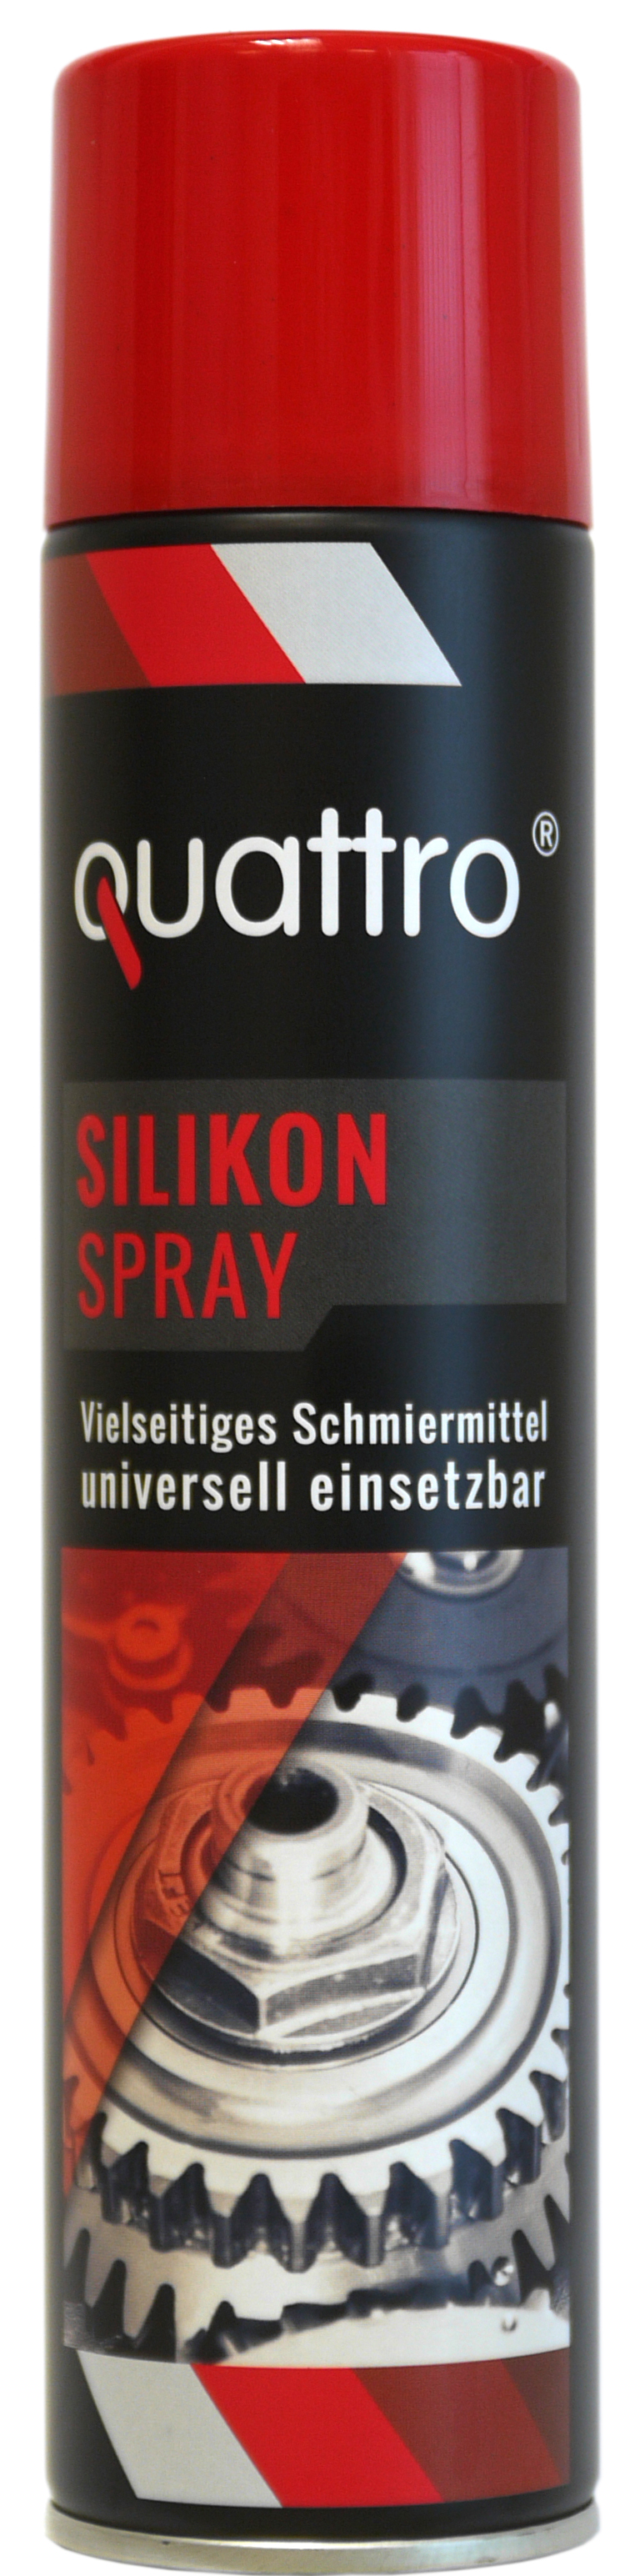 00721 - quattro Silikon Spray 300 ml